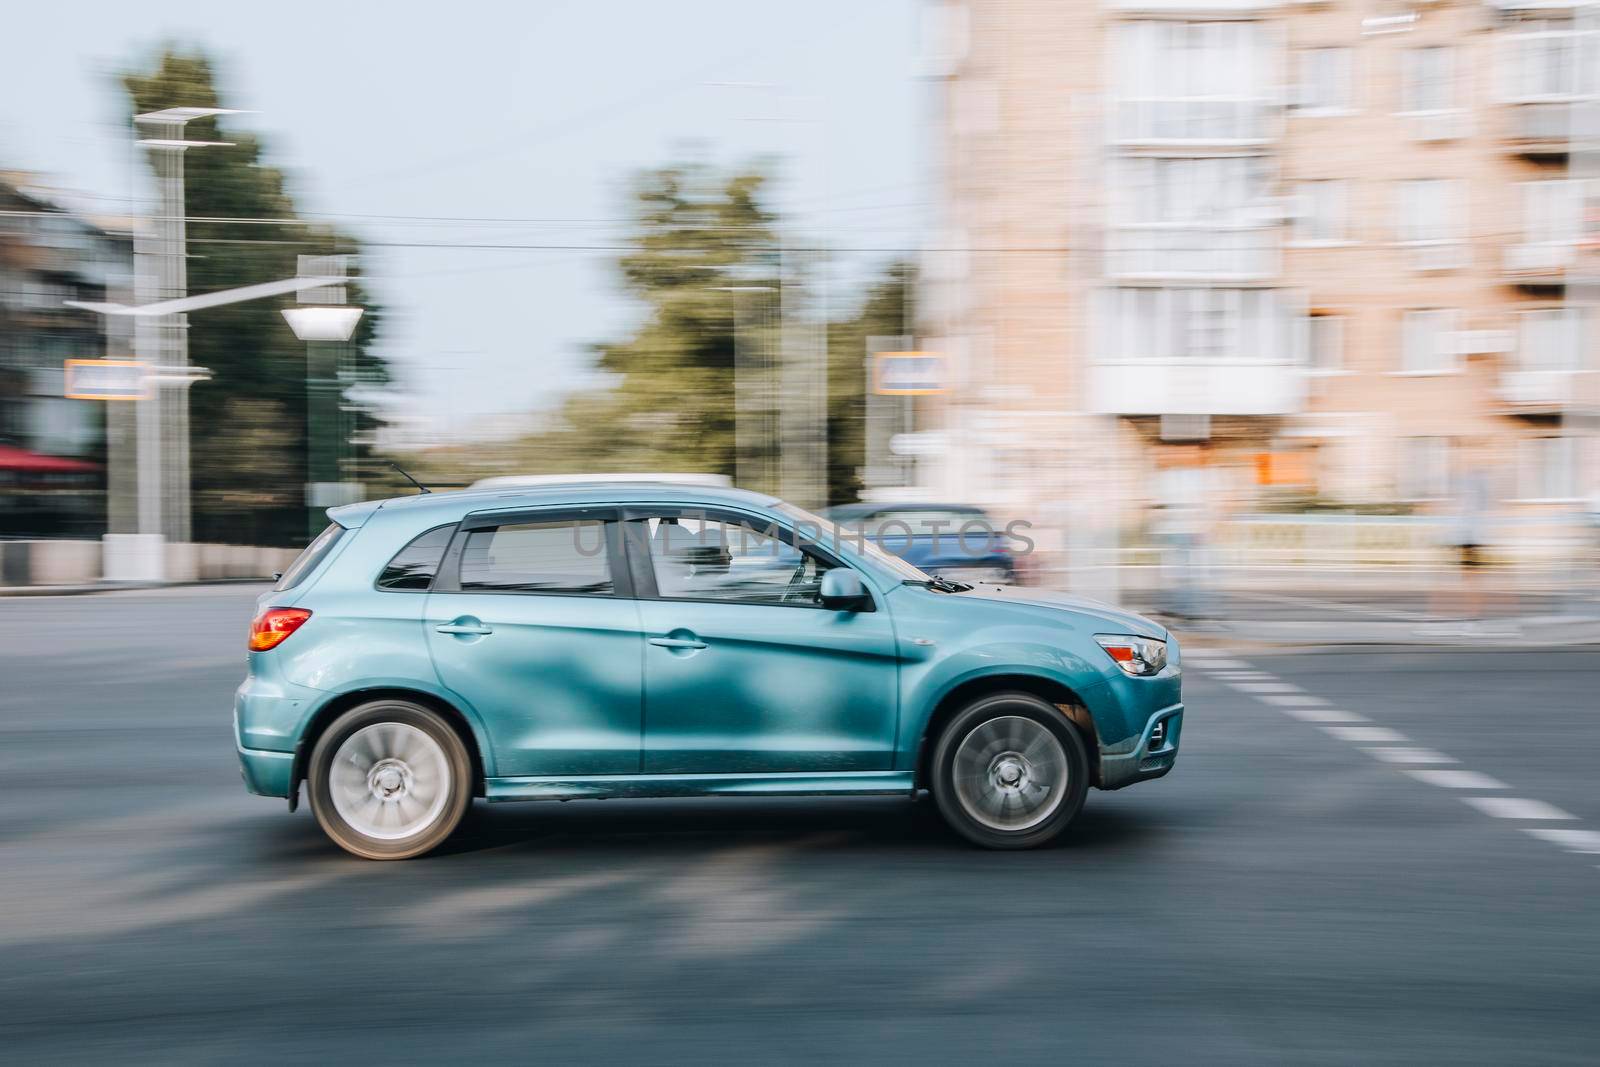 Ukraine, Kyiv - 16 July 2021: Green Mitsubishi car moving on the street. Editorial